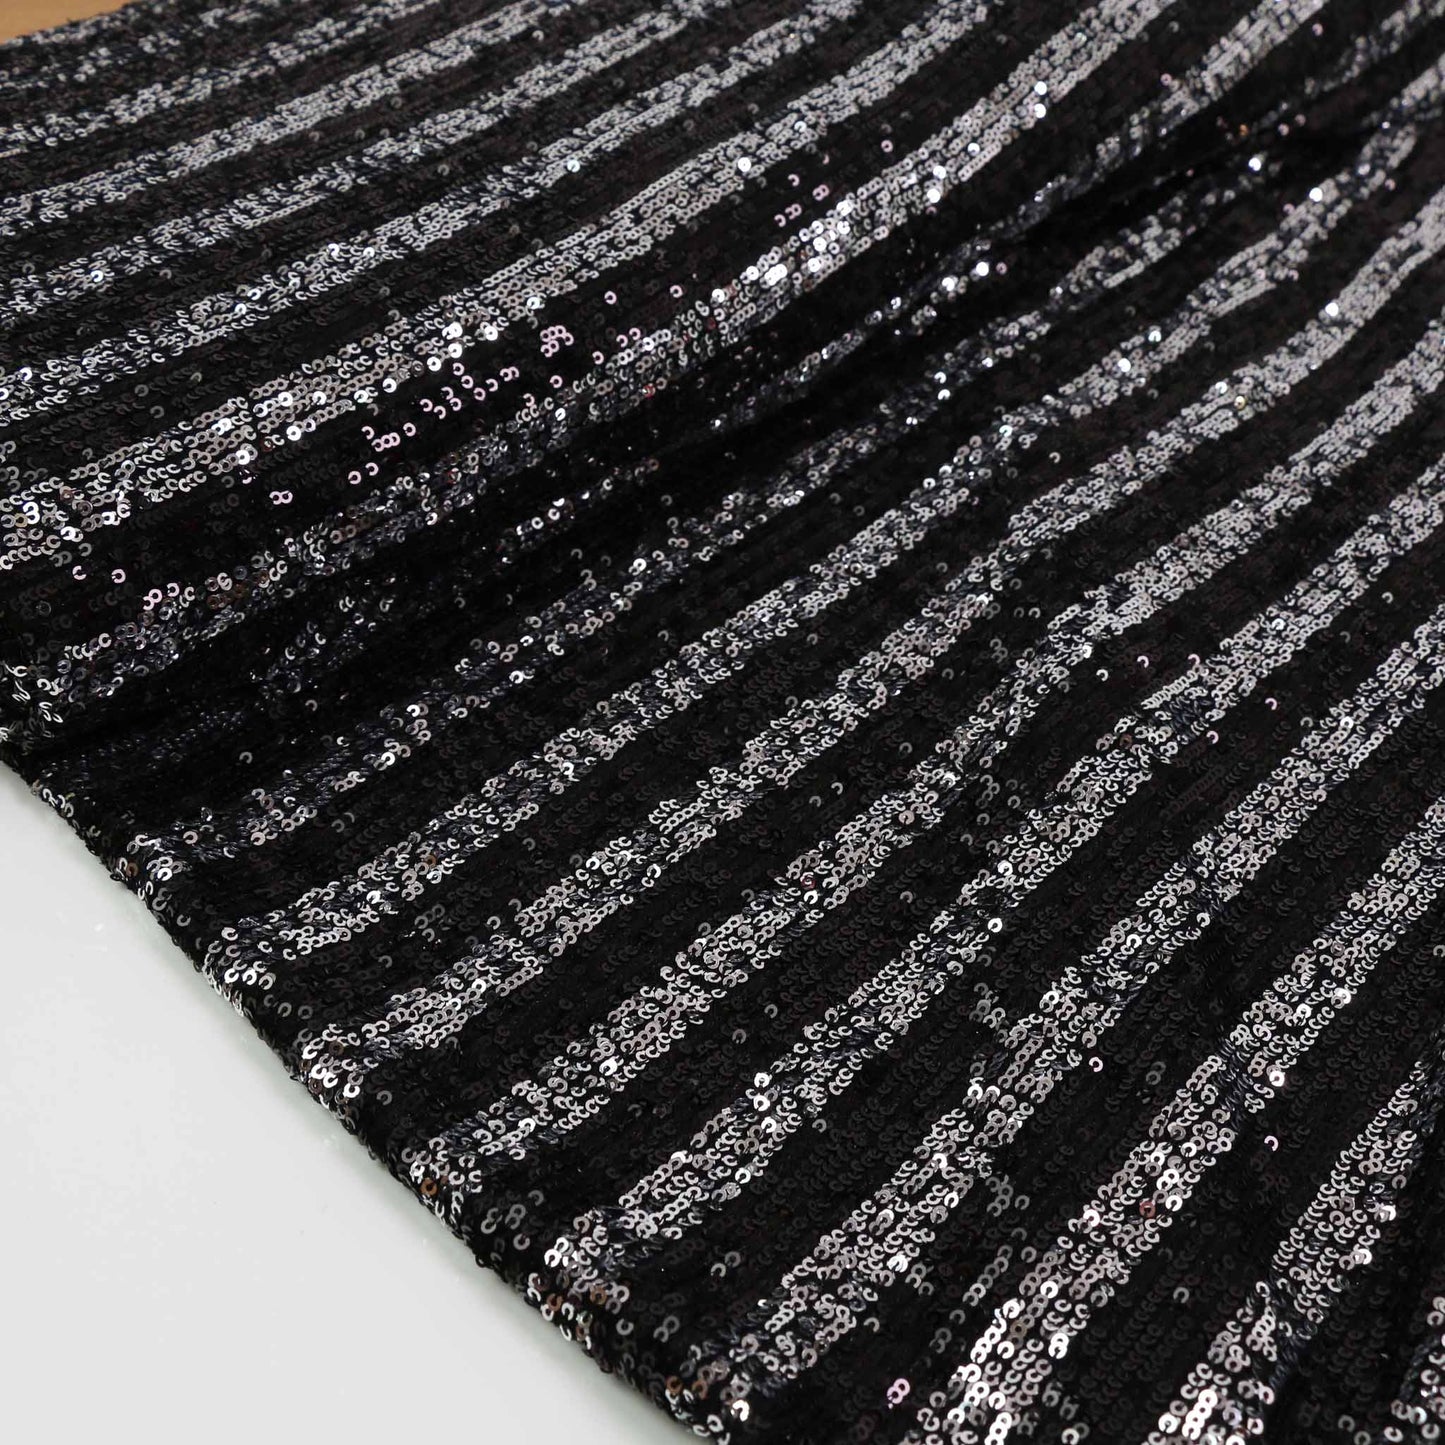 Sequin Fabric - Silver, black